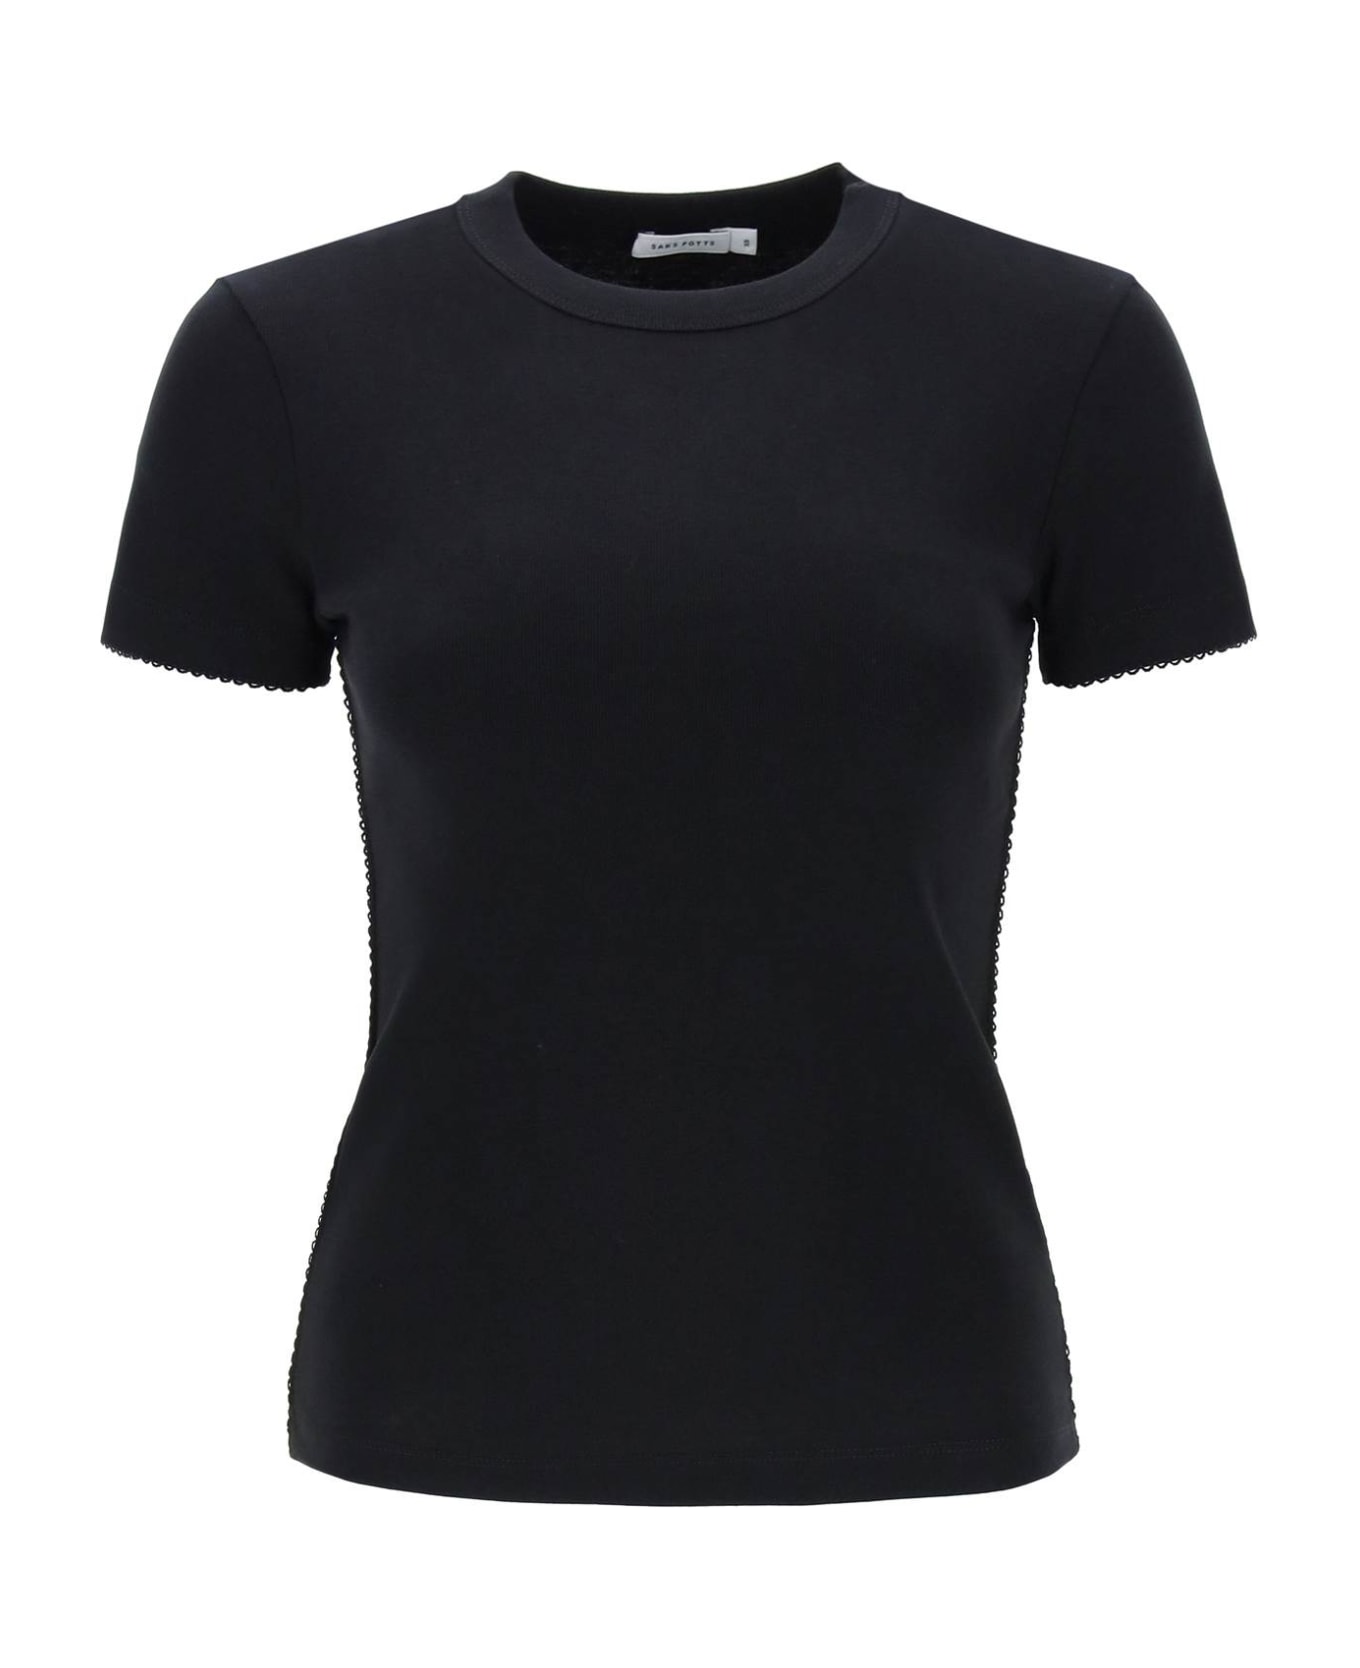 Premiata Uma T-shirt With Picot Details - Black